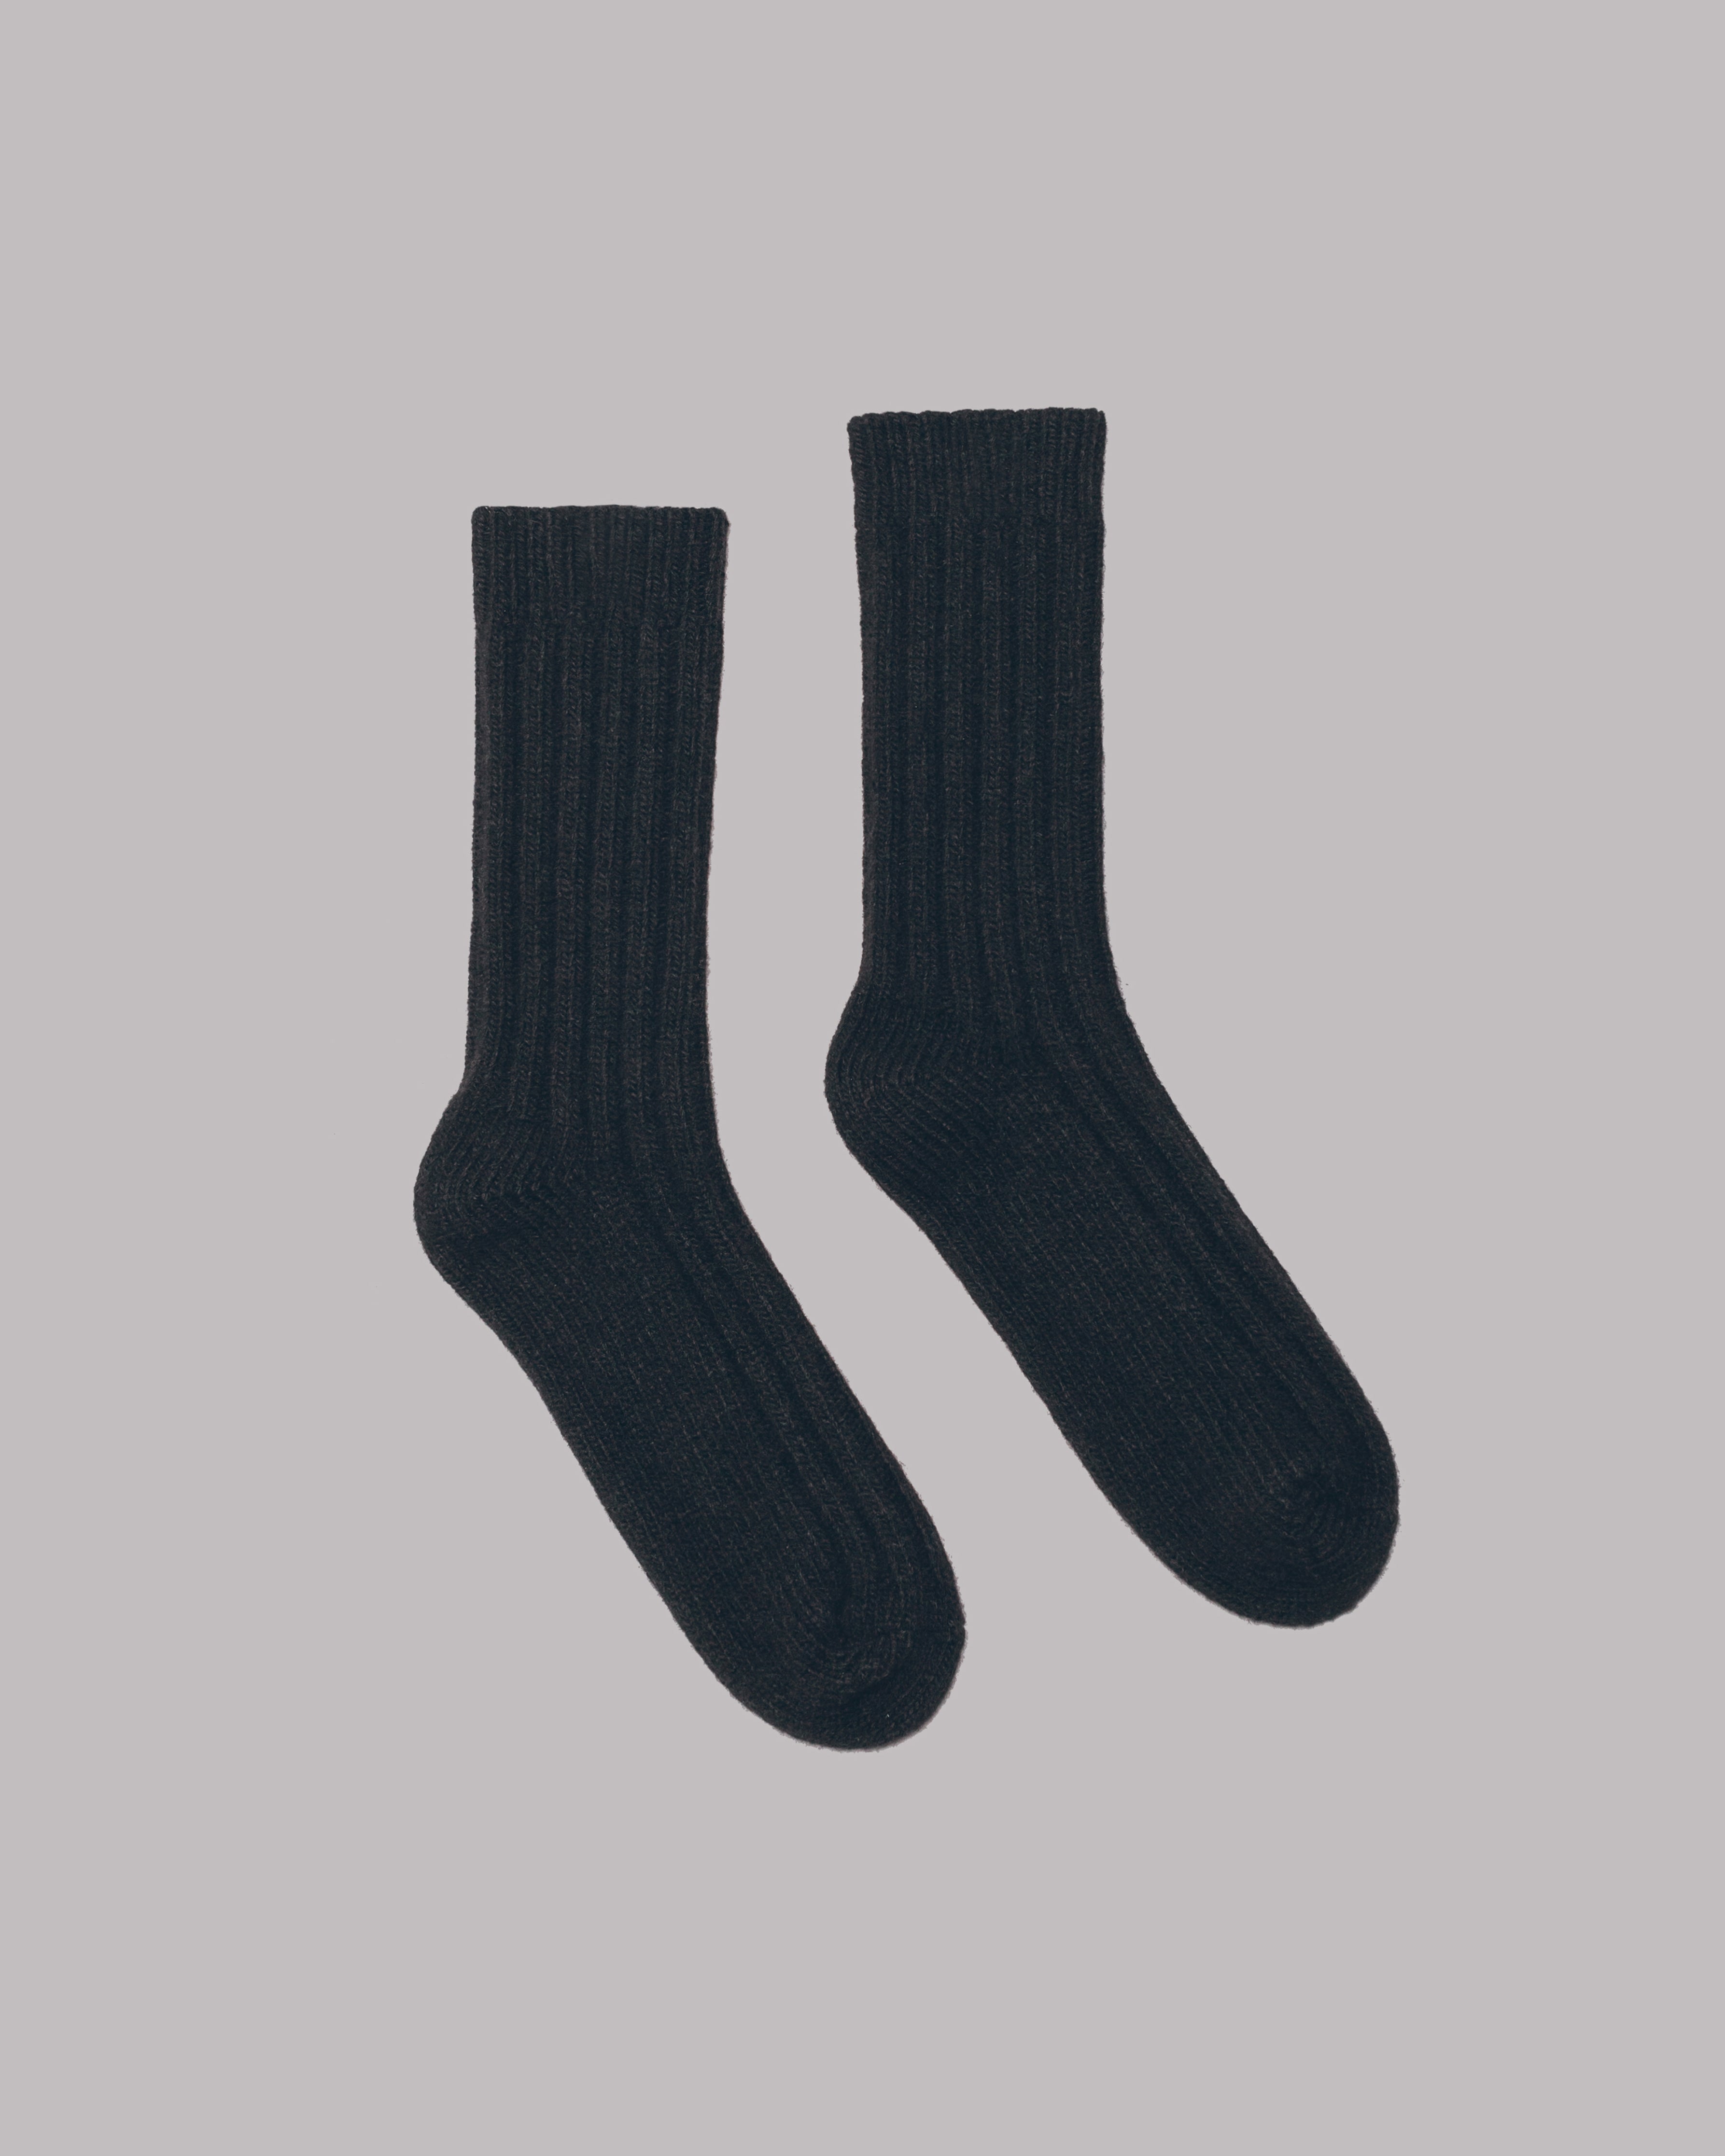 The Black Knitted Socks